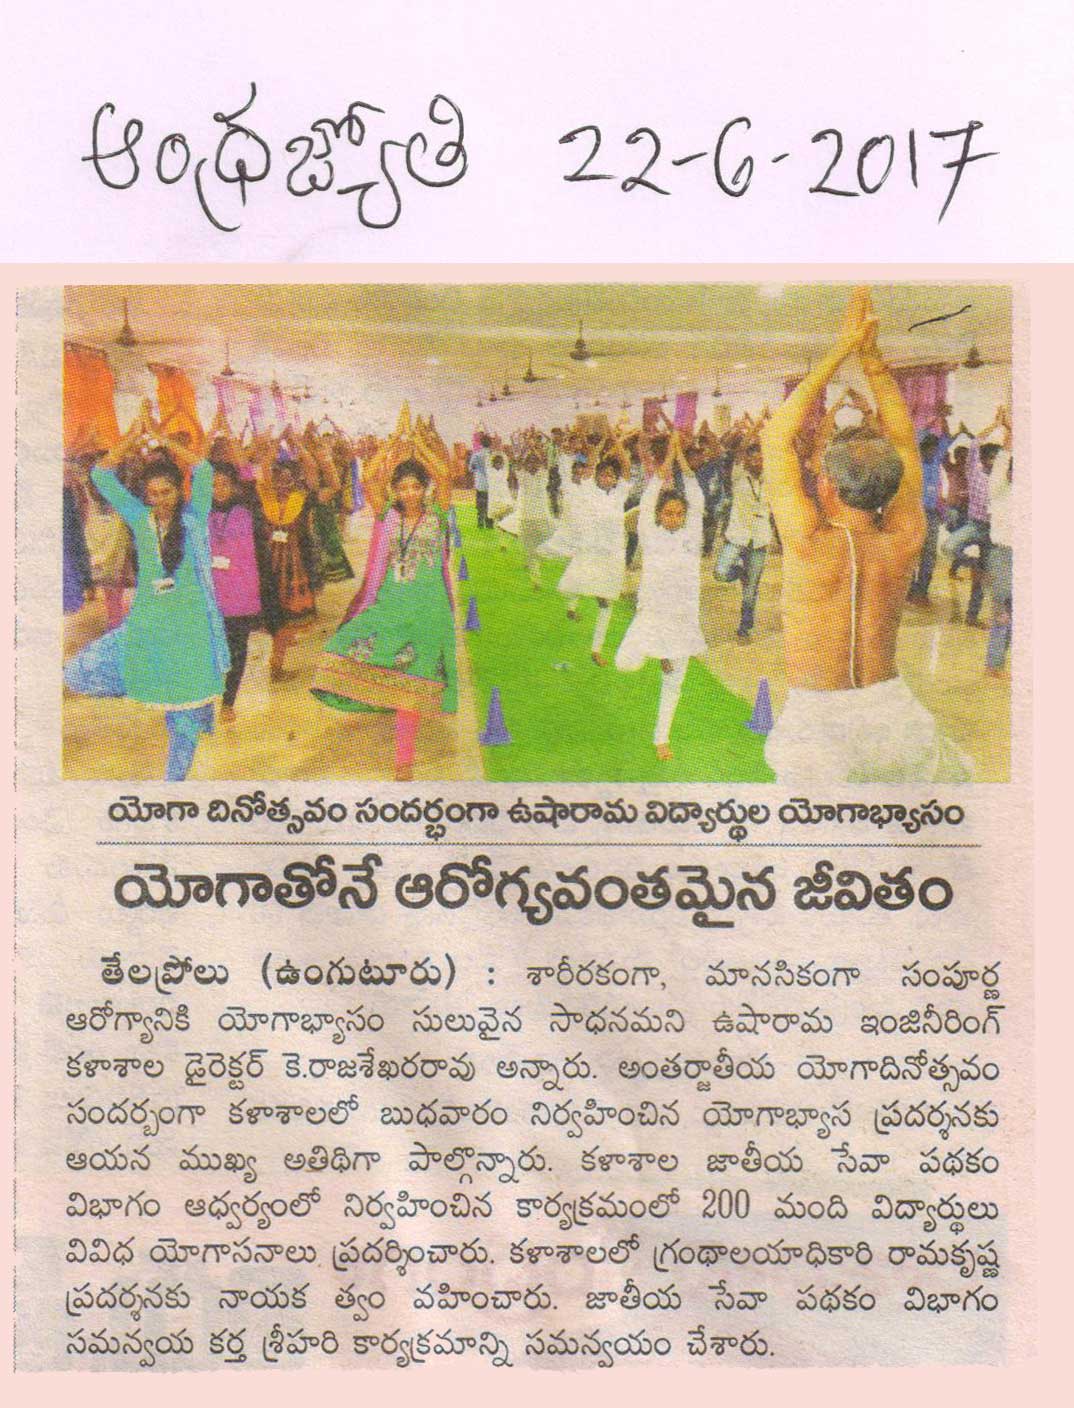 andhrajyothi international yoga day 2017 paper clipping